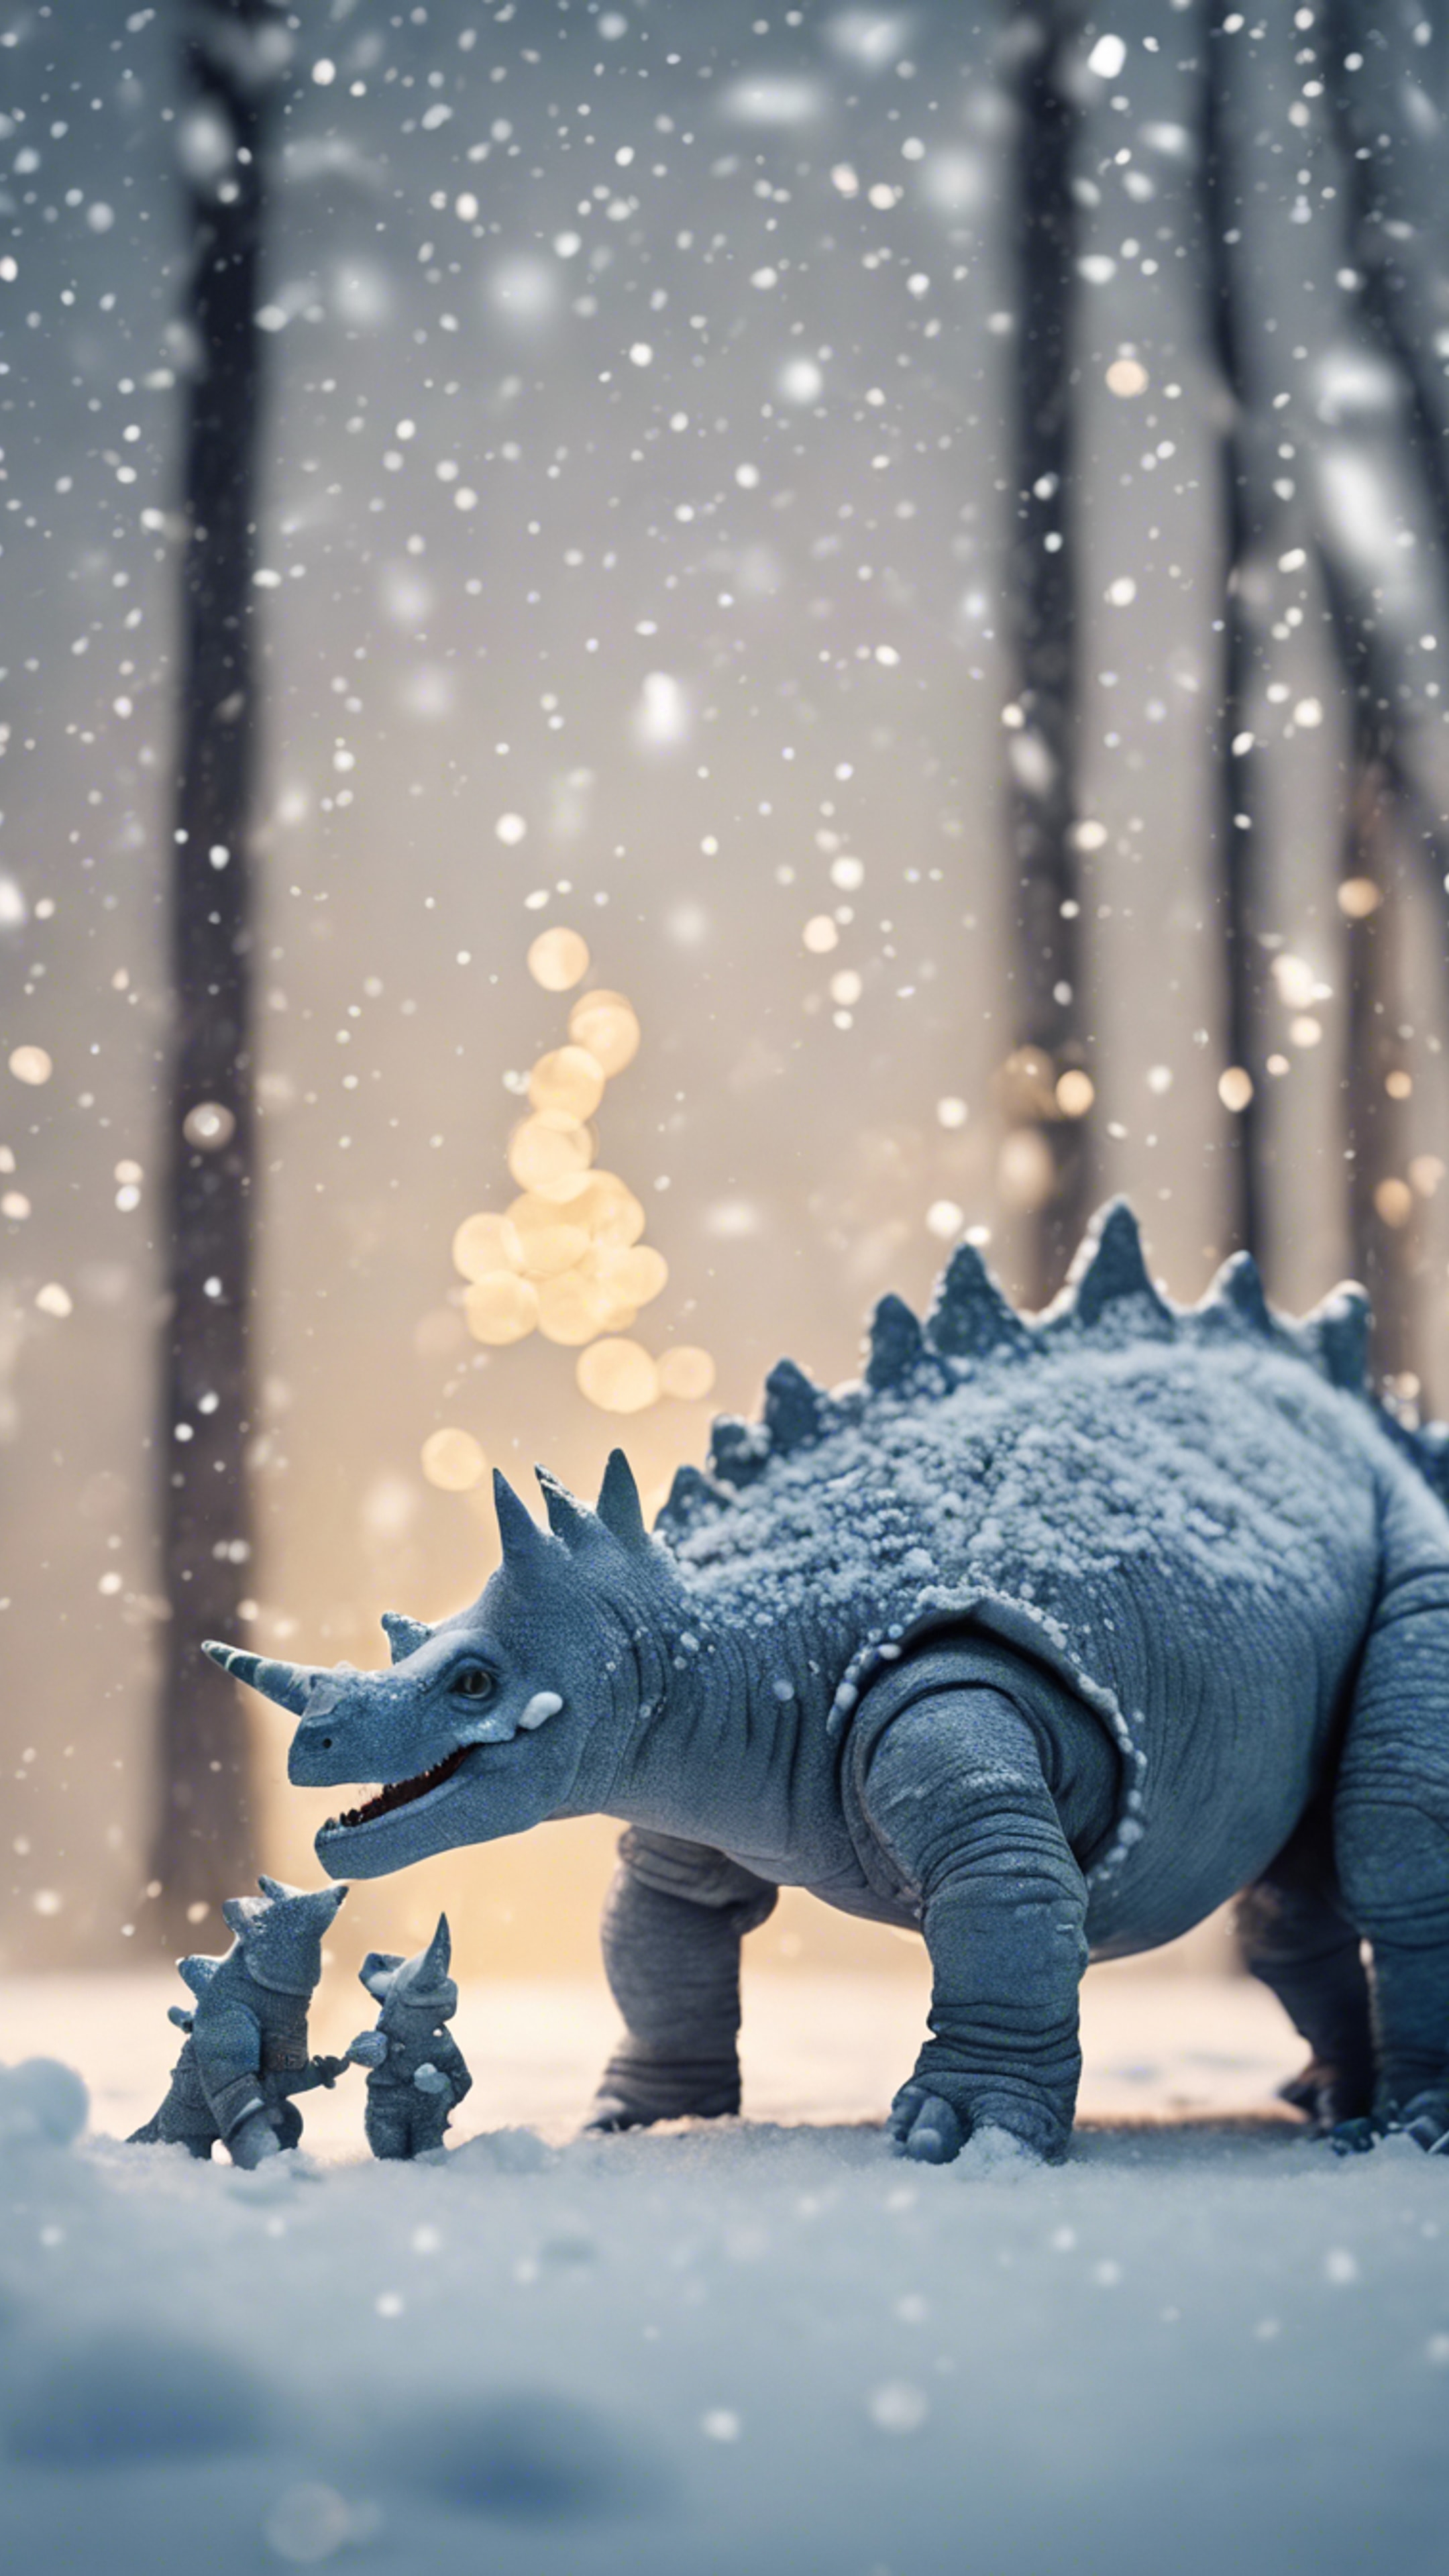 A family of Pachyrhinosaurus making snow dinosaurs in a winter wonderland. Tapeta[959d968d50614e28908d]